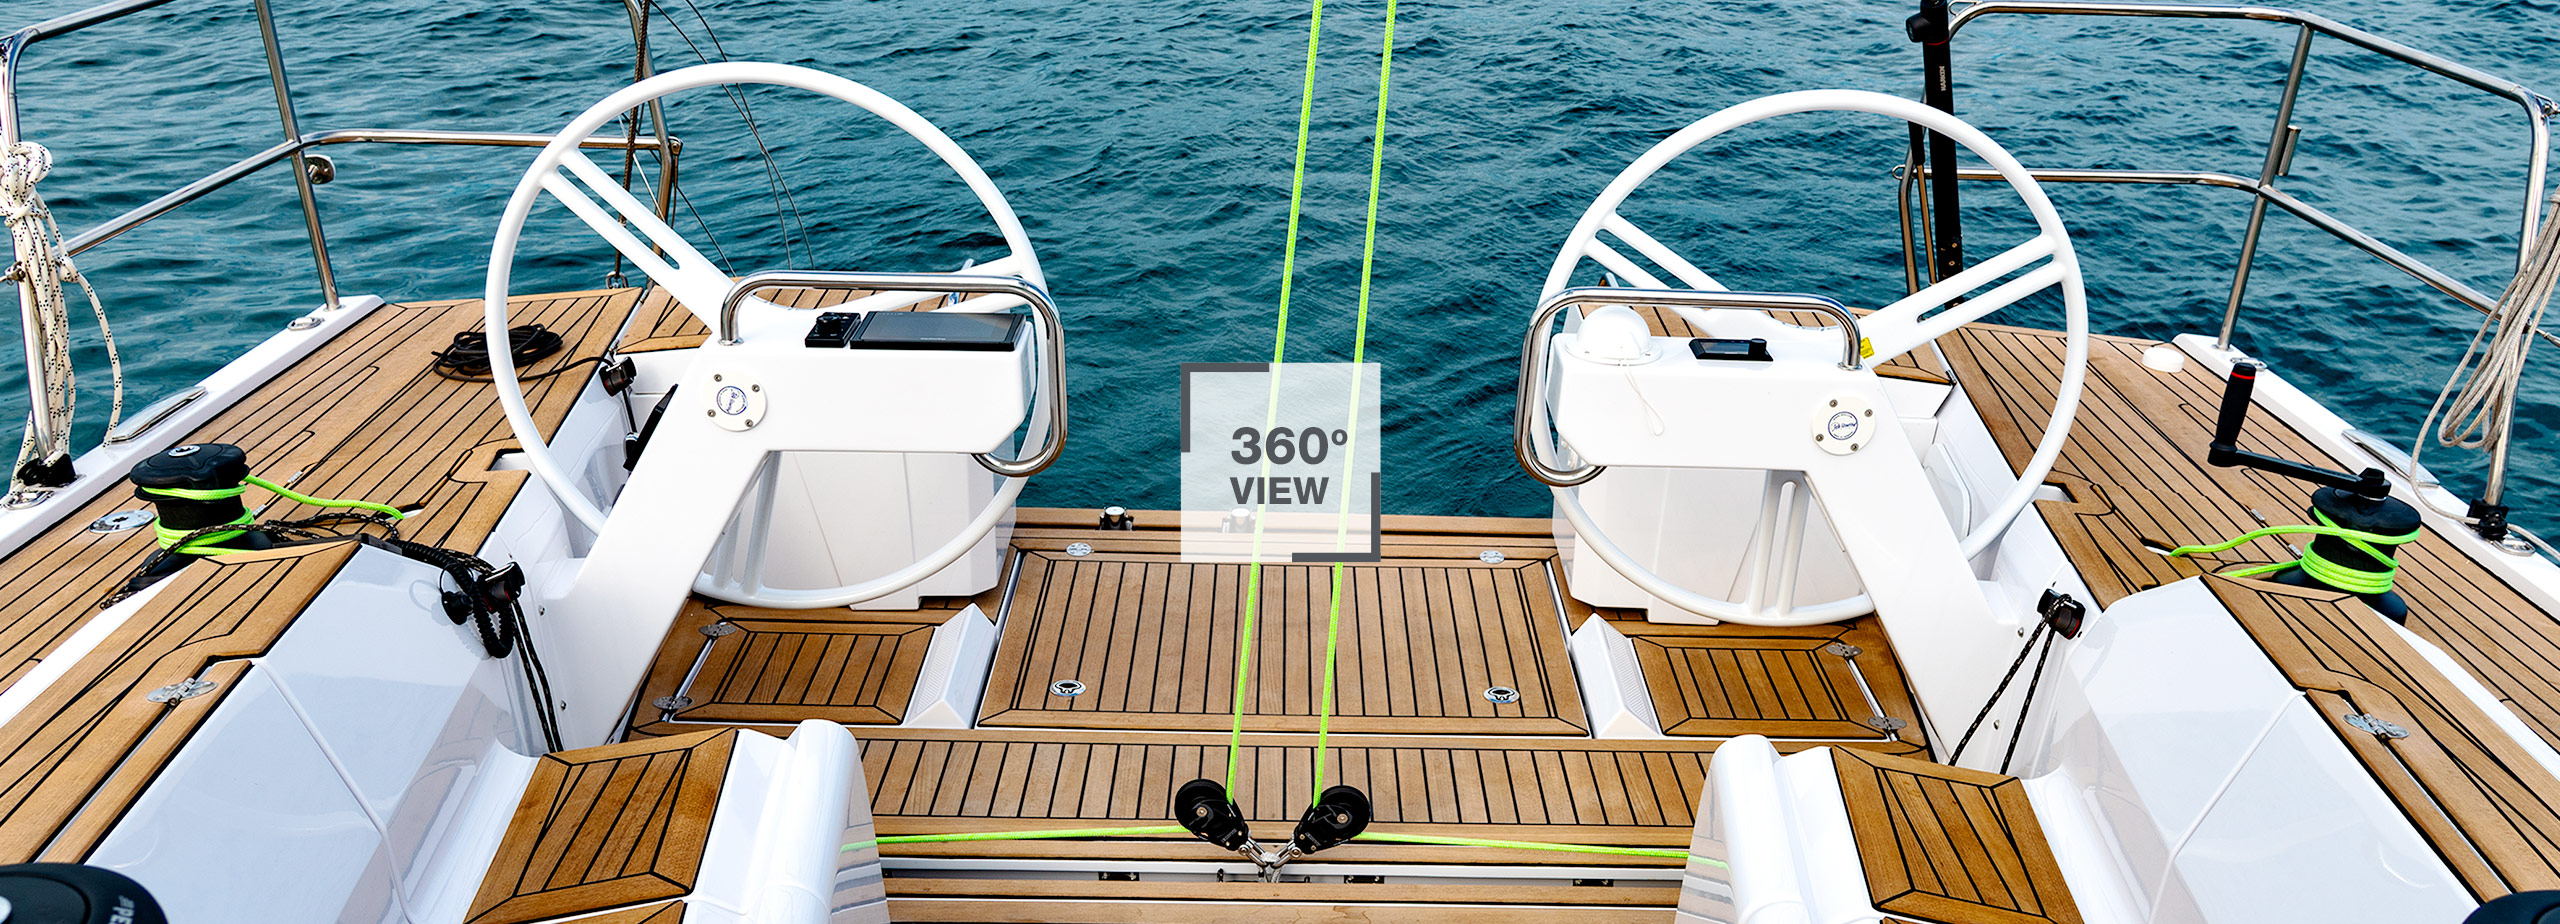 elan-yachts-e5-performance-sailboat-360-image